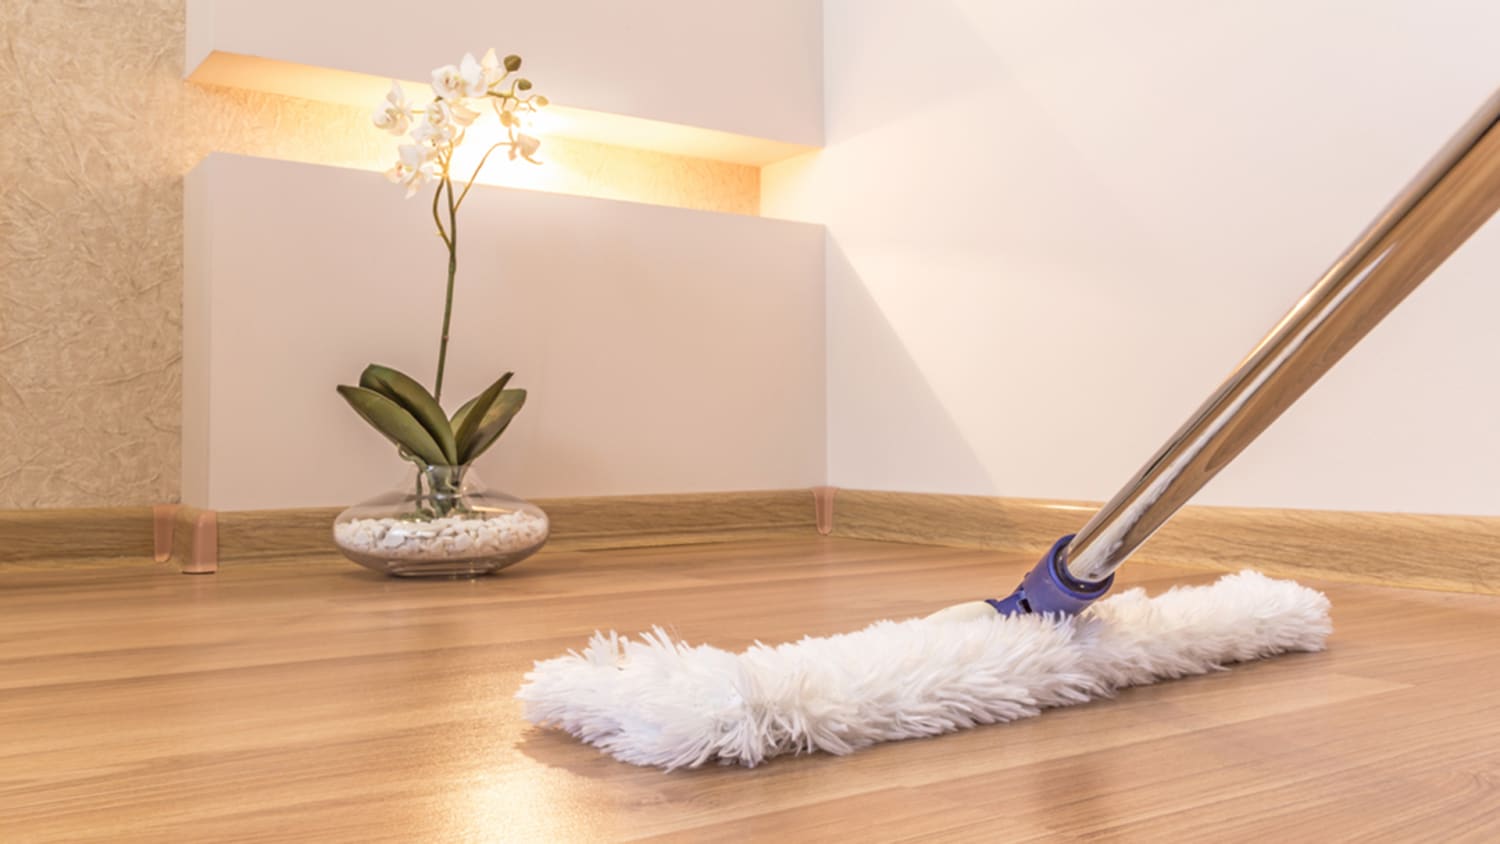 How To Clean Hardwood Floors The Right Way, Hardwood Floor Cleaner Reviews 2019